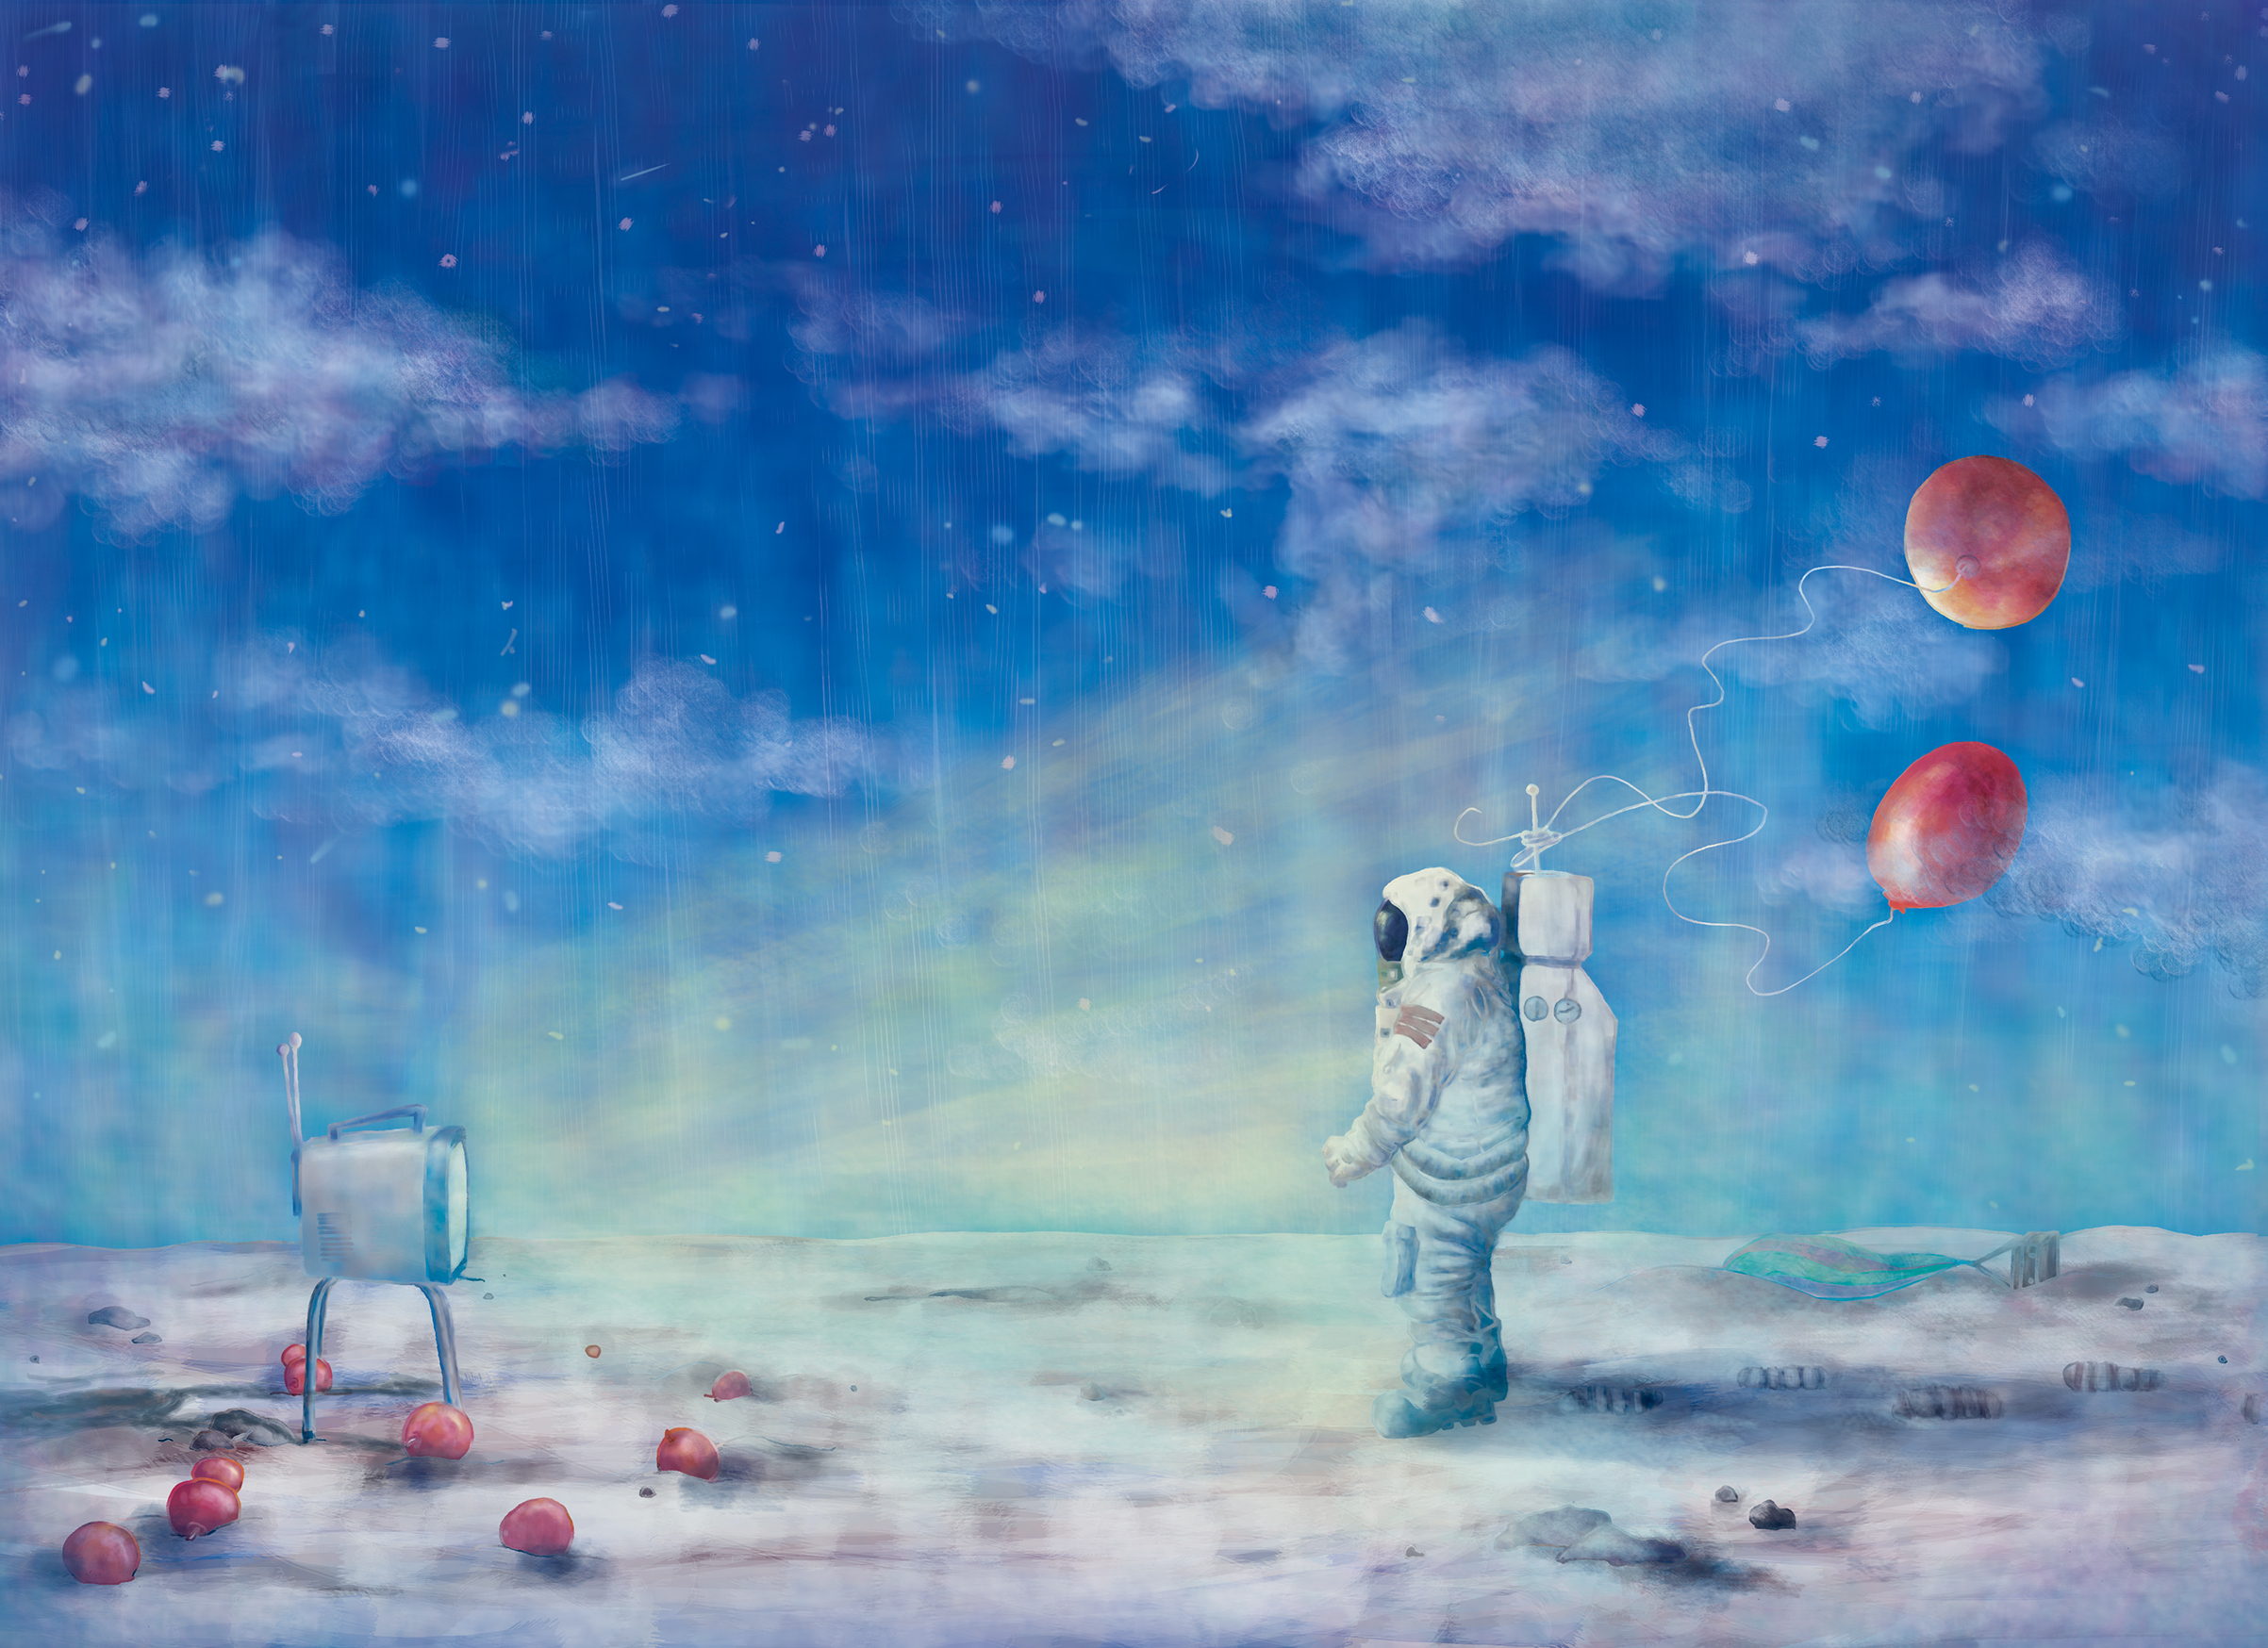 Sci Fi astronaut exploring a futuristic world in this exciting desktop wallpaper.